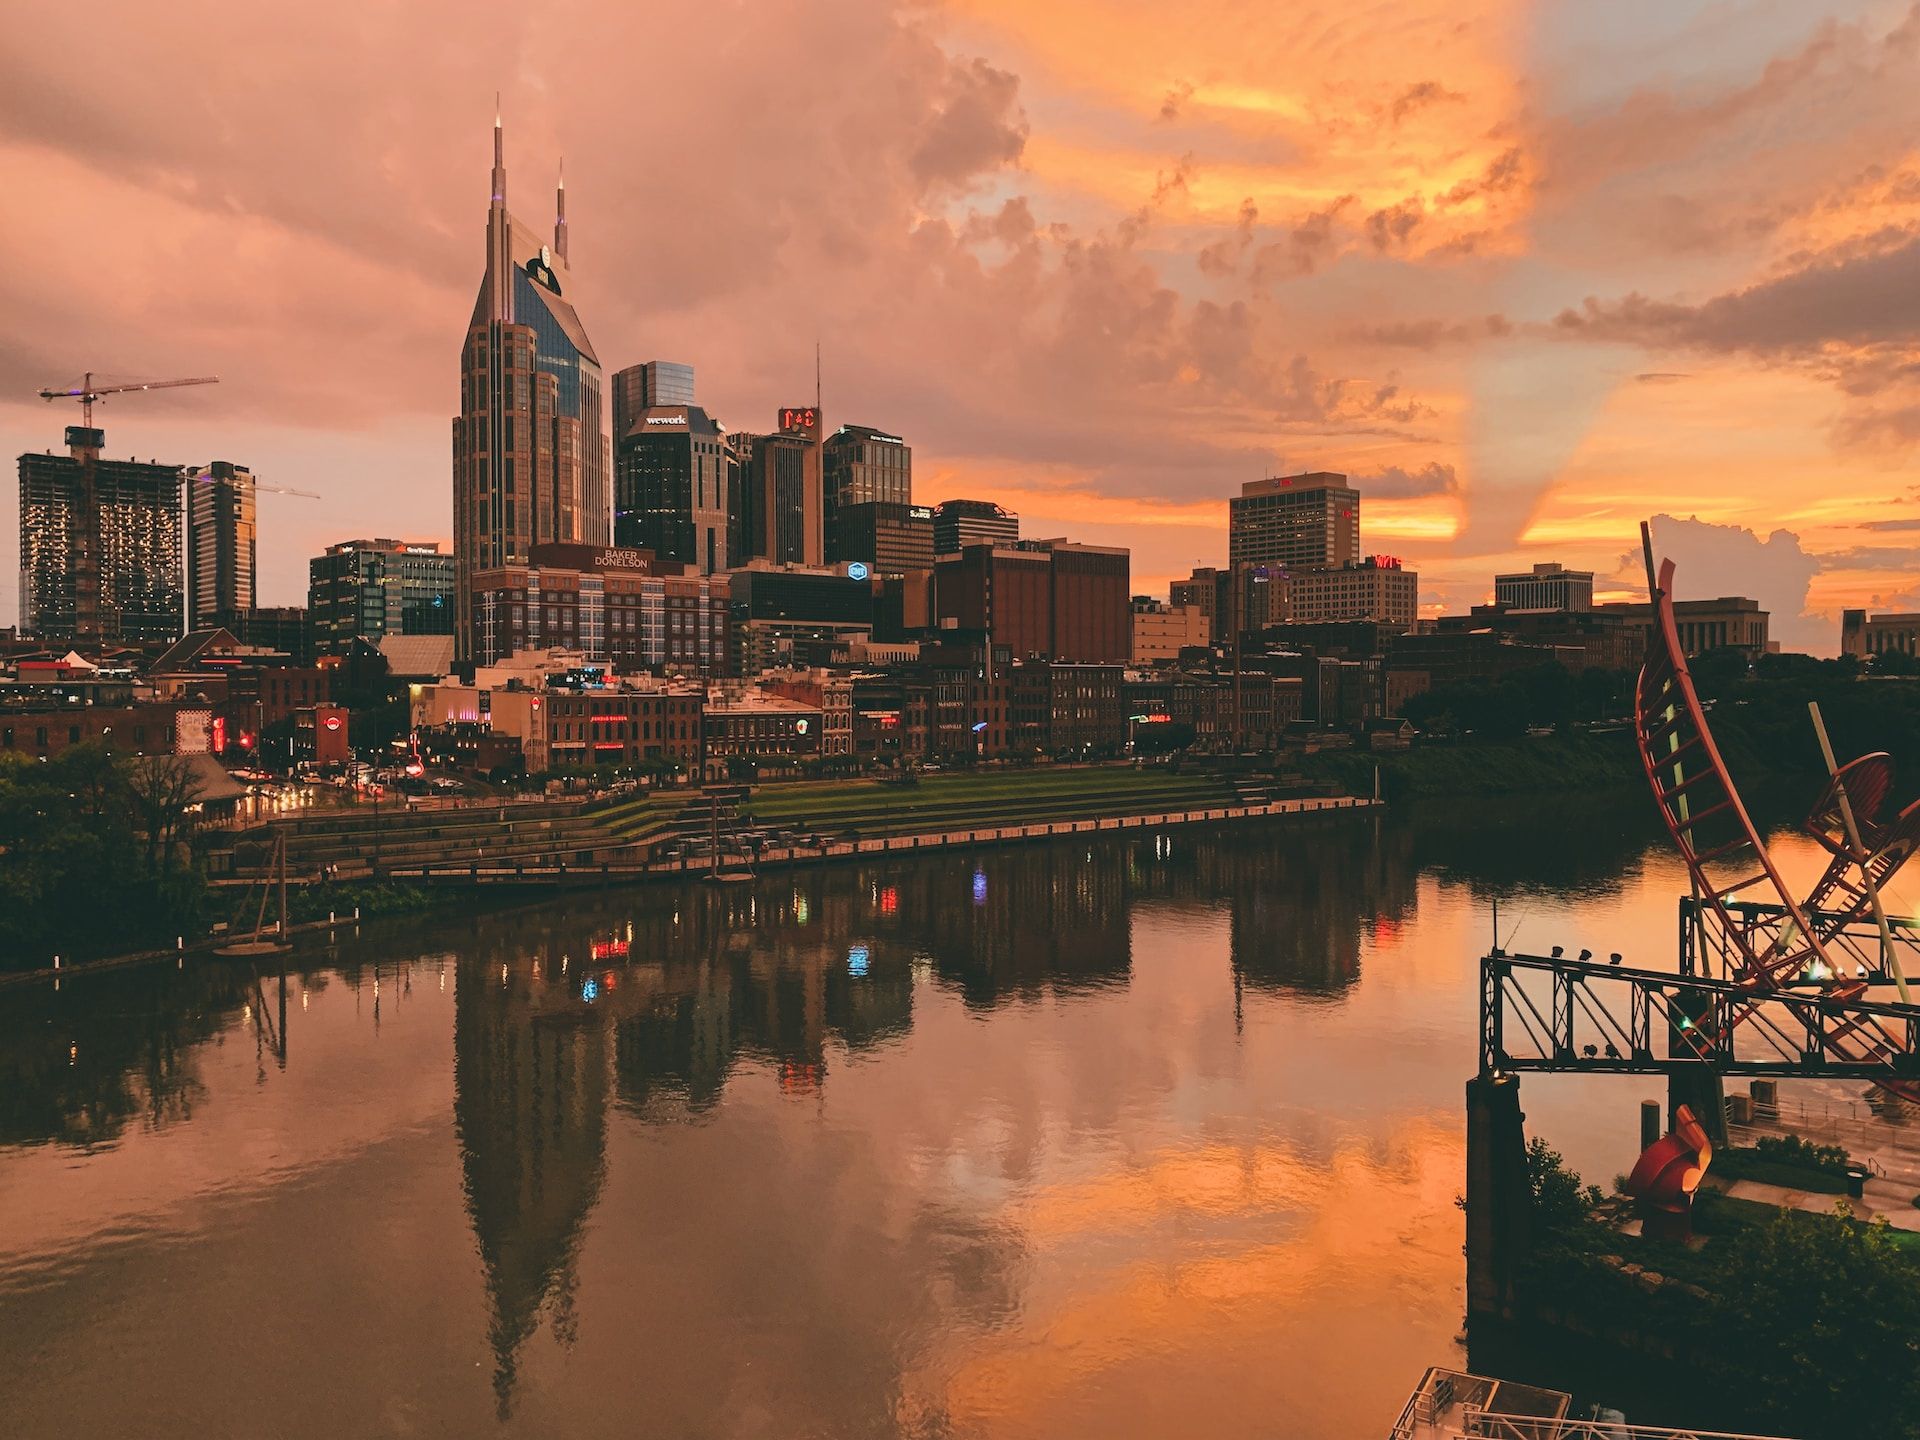 Orange skies over the Nashville skyline